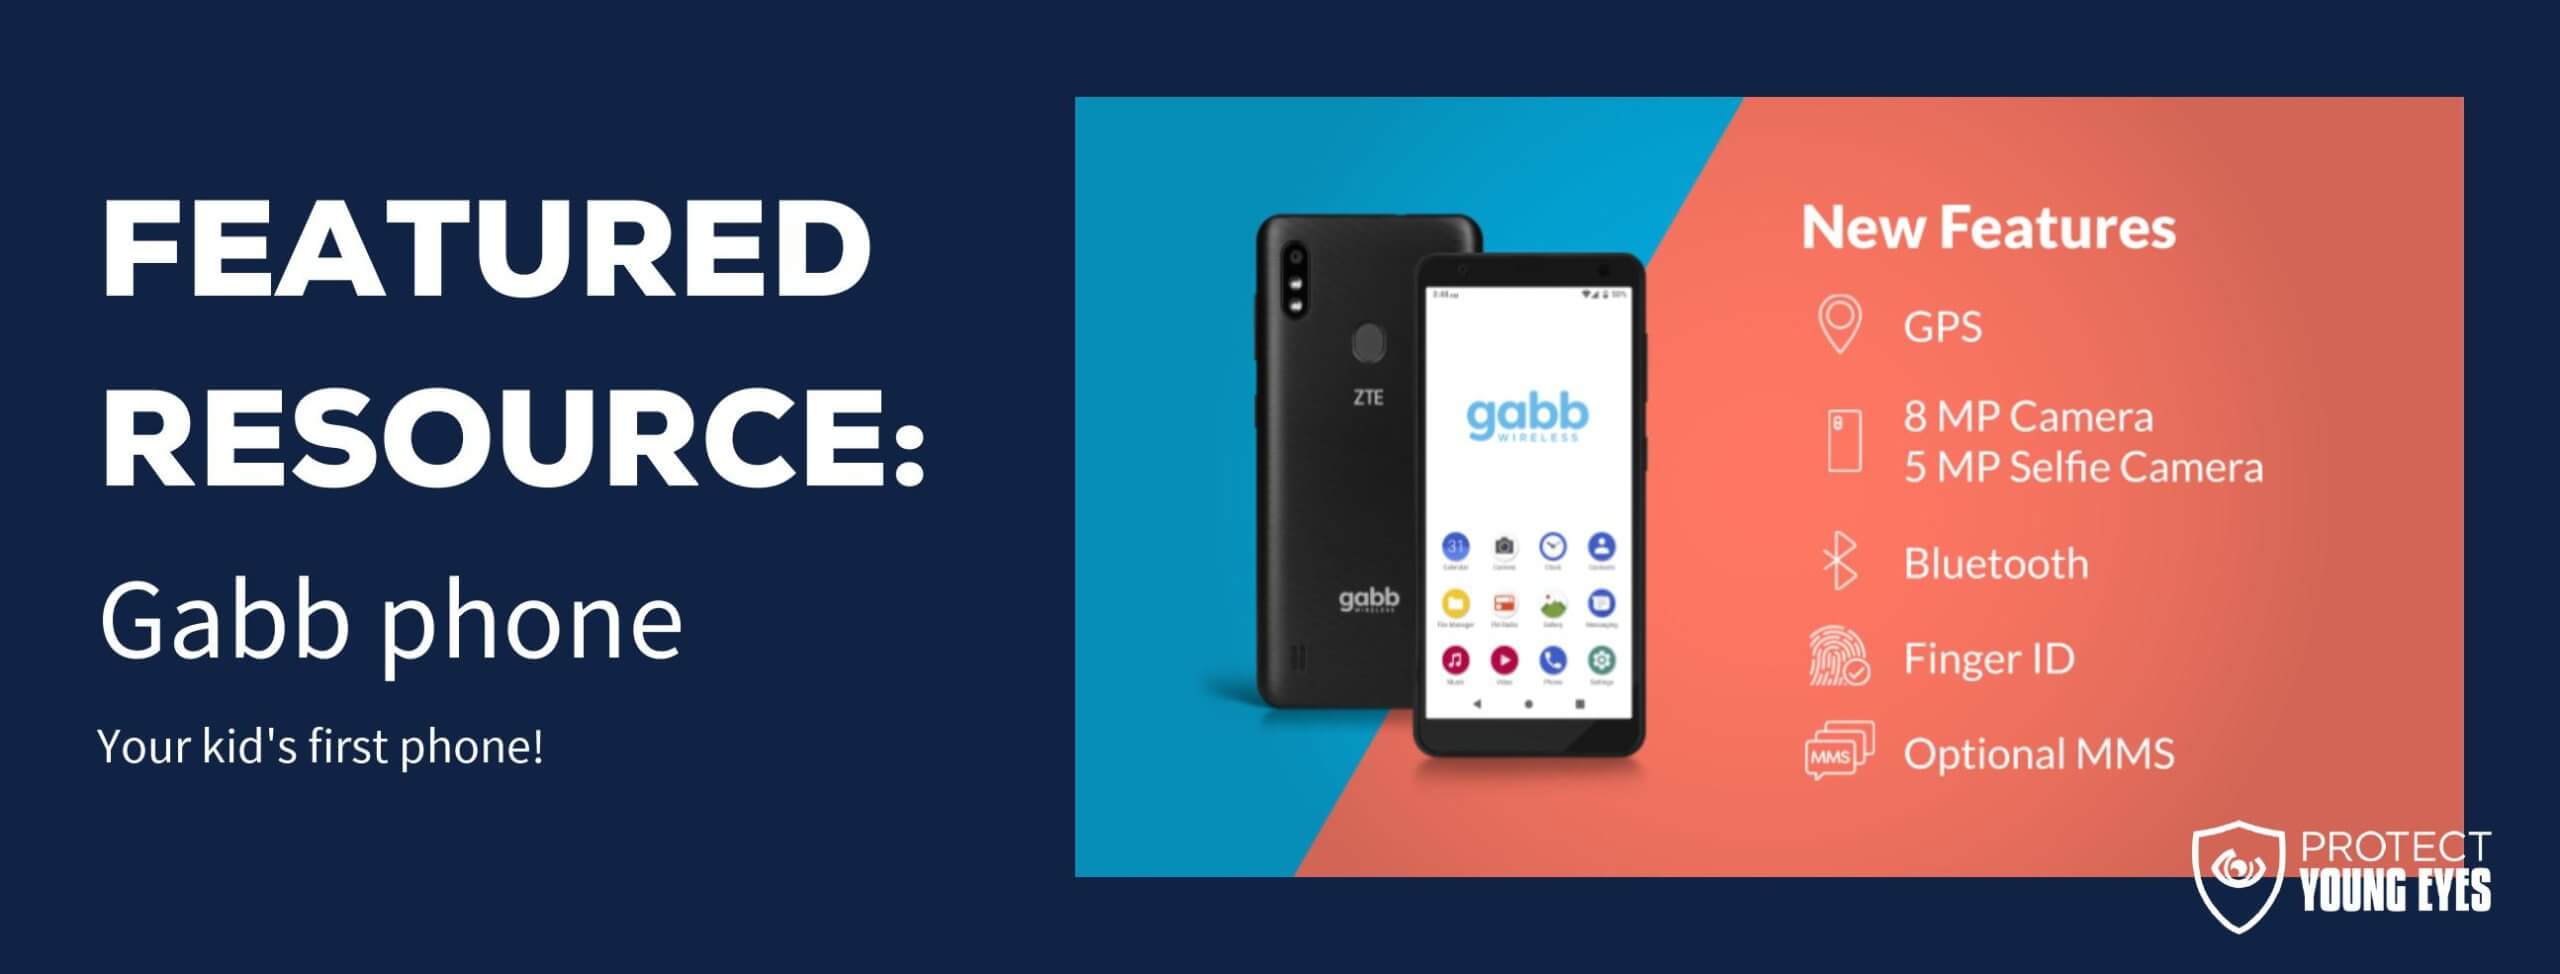 Featured Resource: Gabb Phone